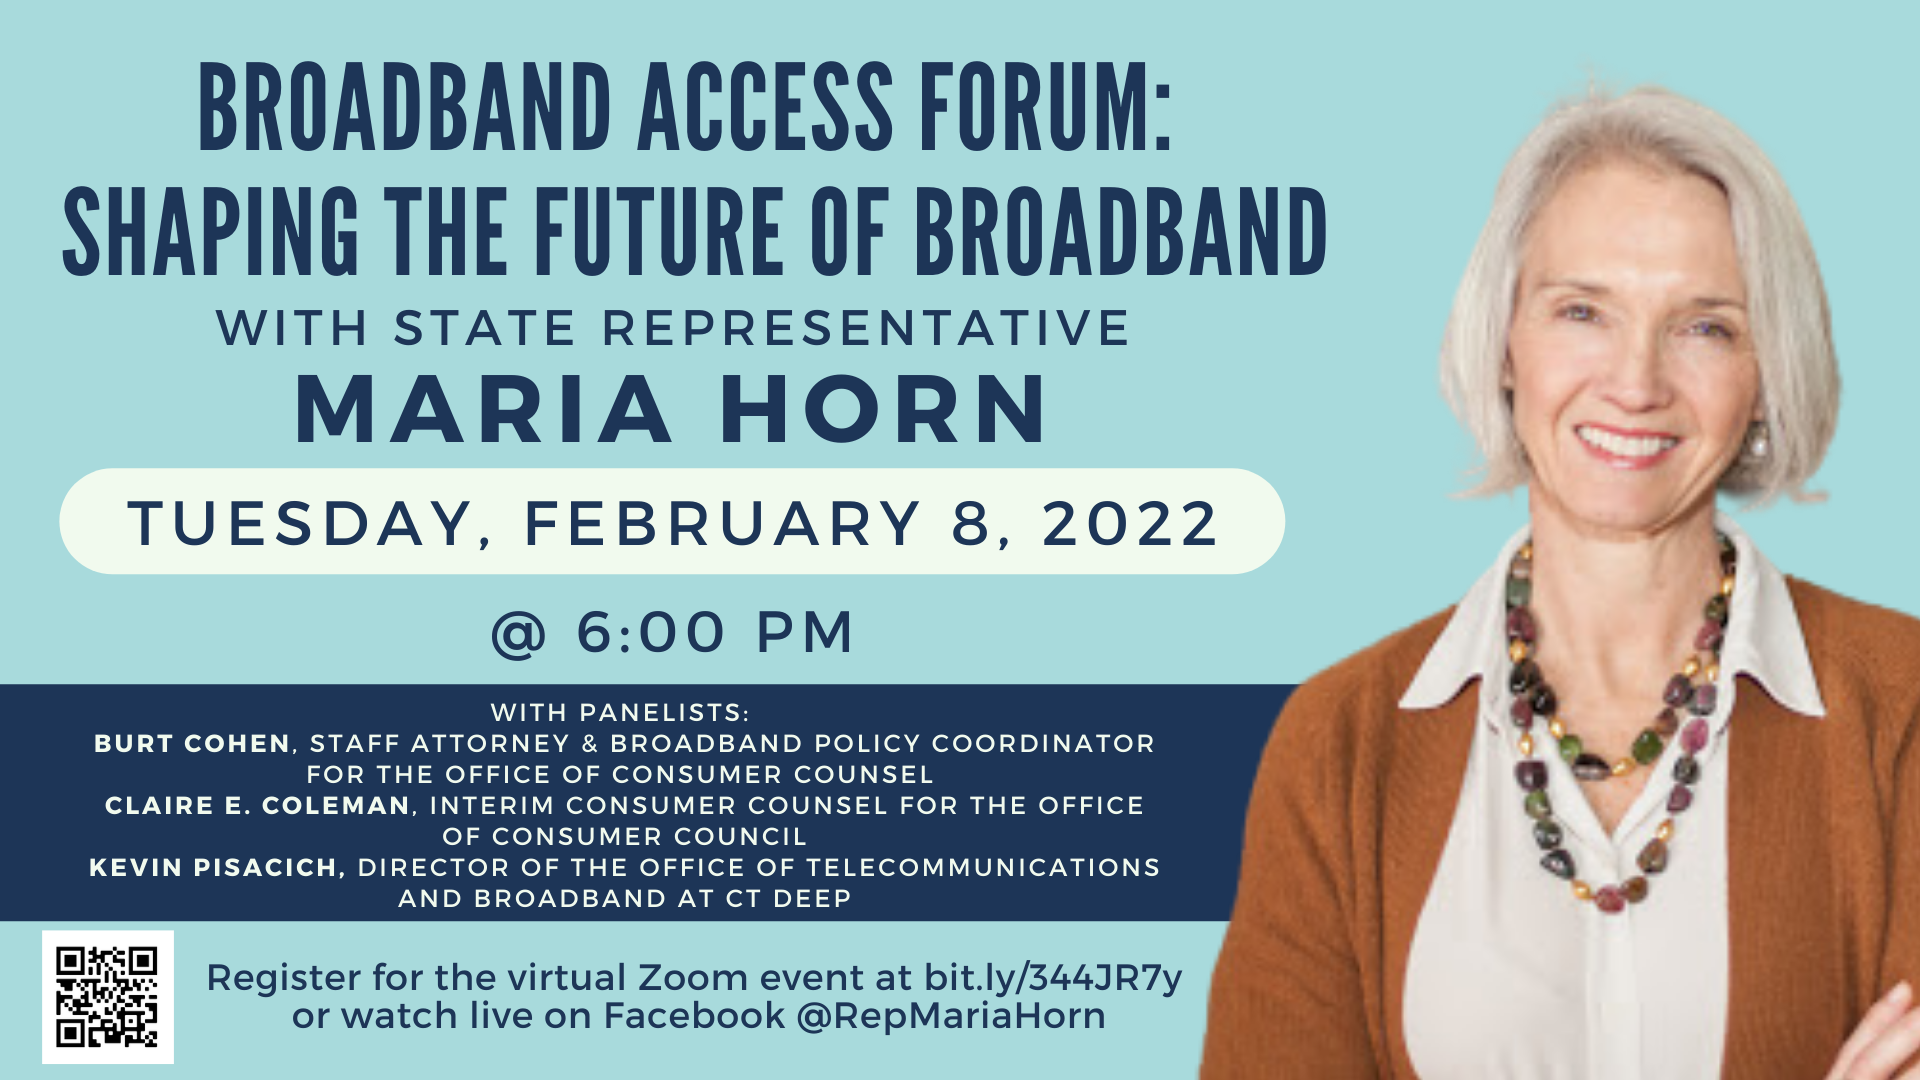 Broadband Access Forum: Shaping the Future of Broadband